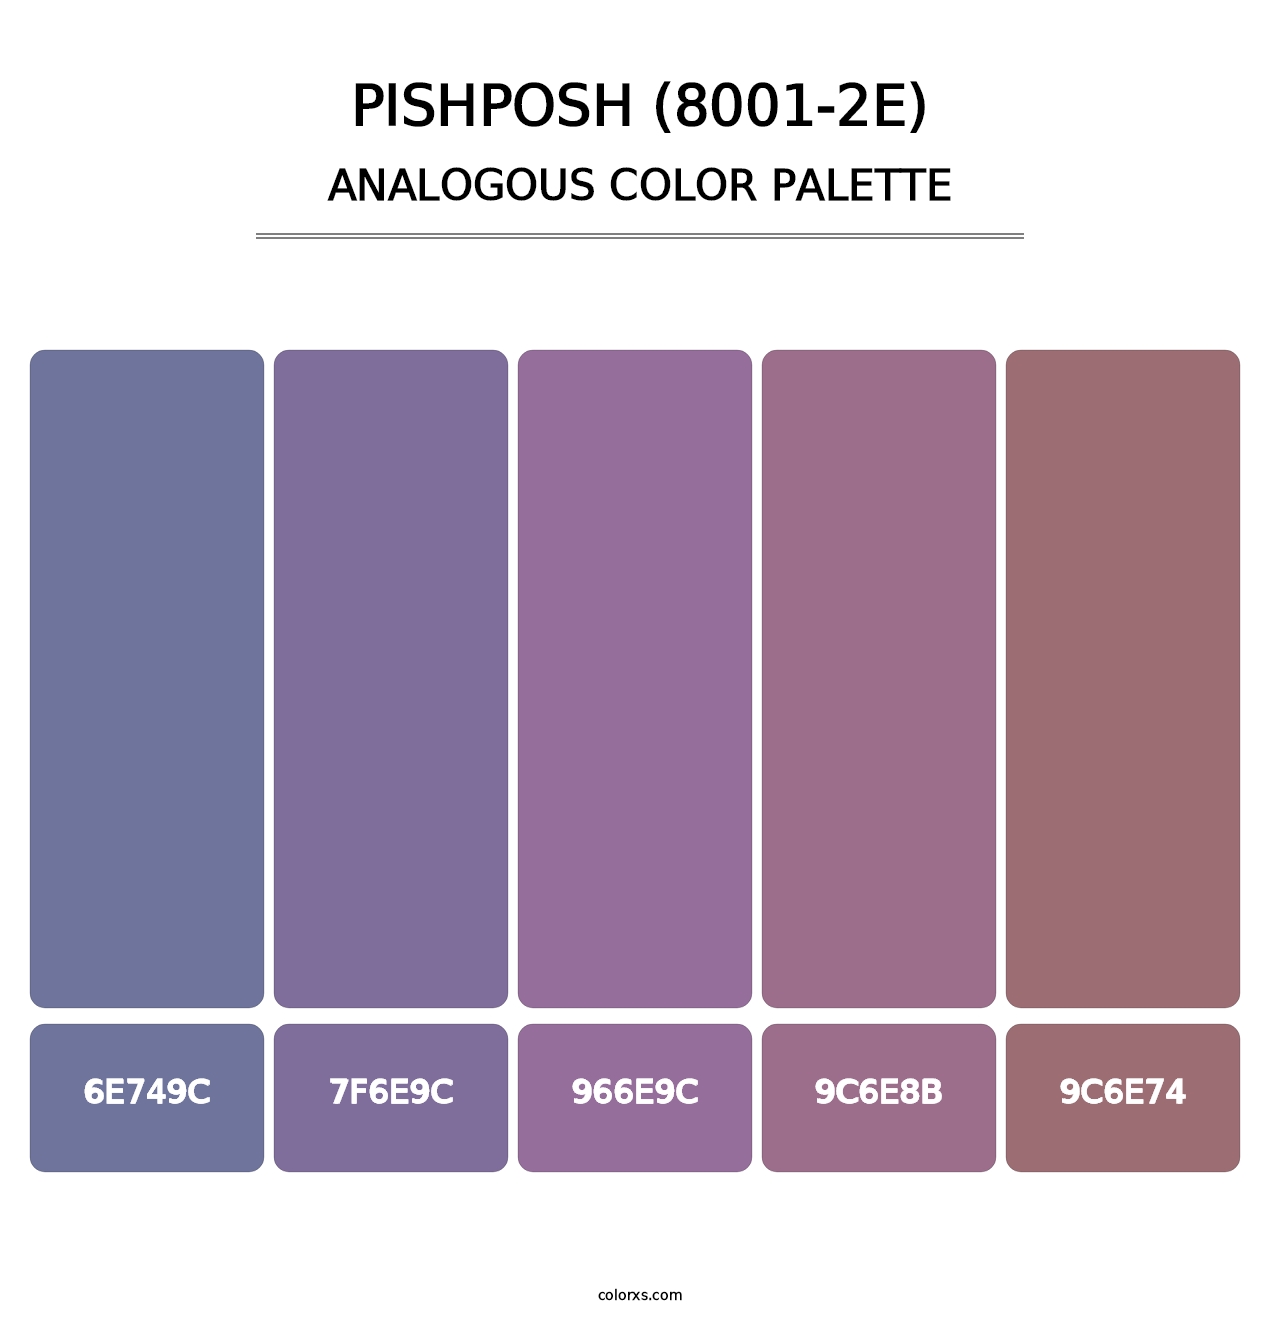 Pishposh (8001-2E) - Analogous Color Palette